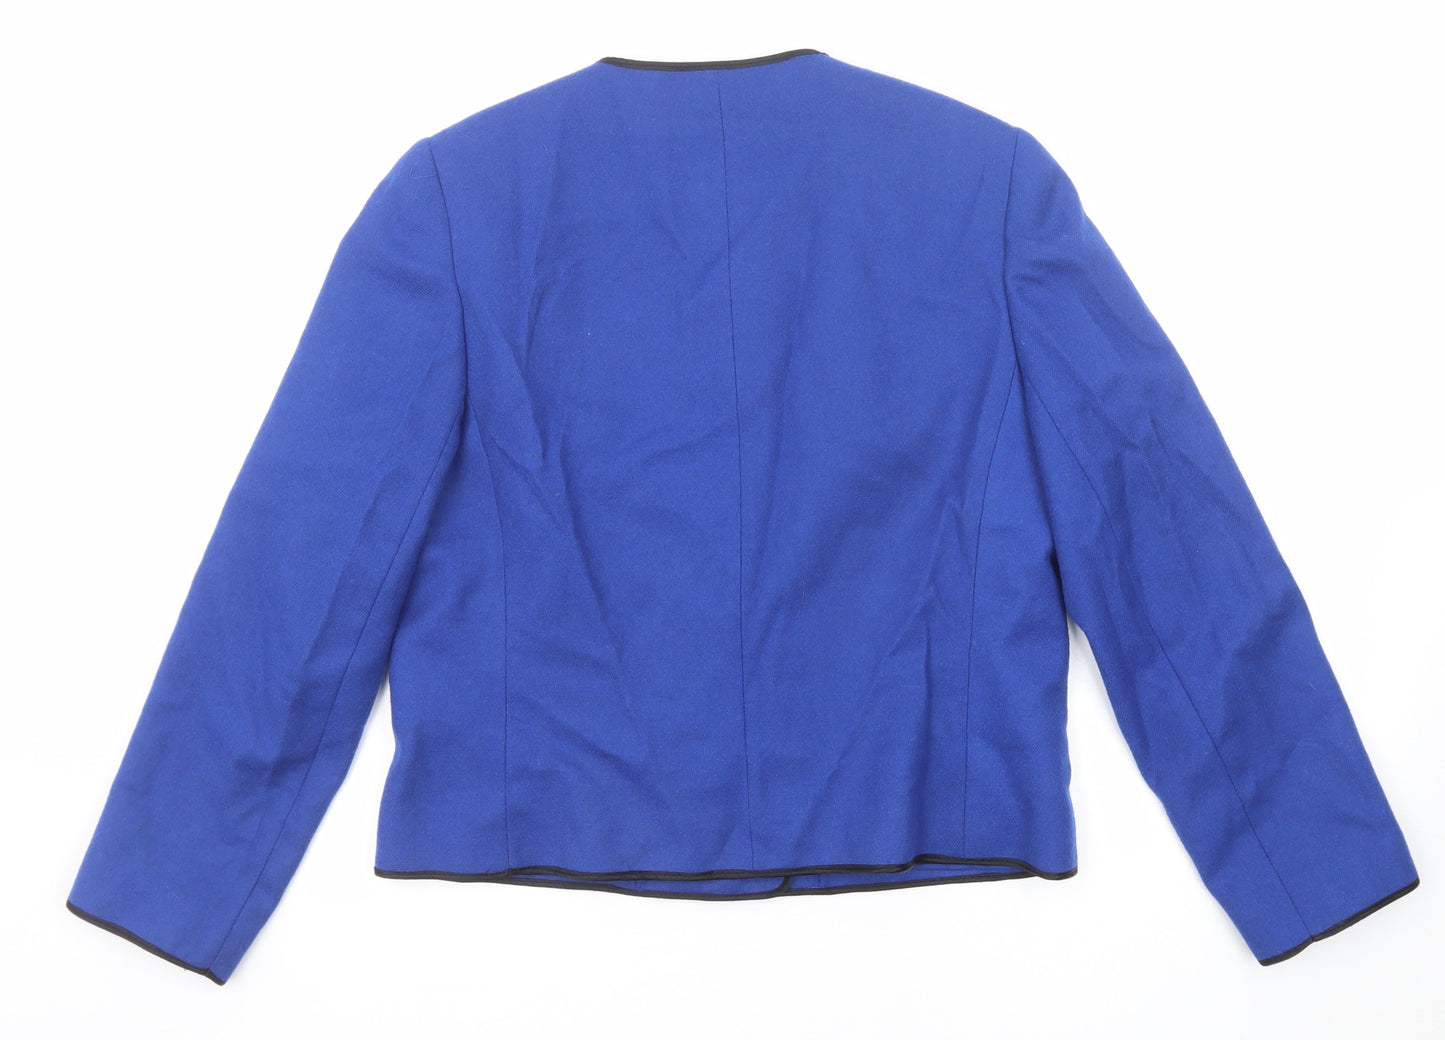 Windsmoor Womens Blue Jacket Blazer Size 14 Button